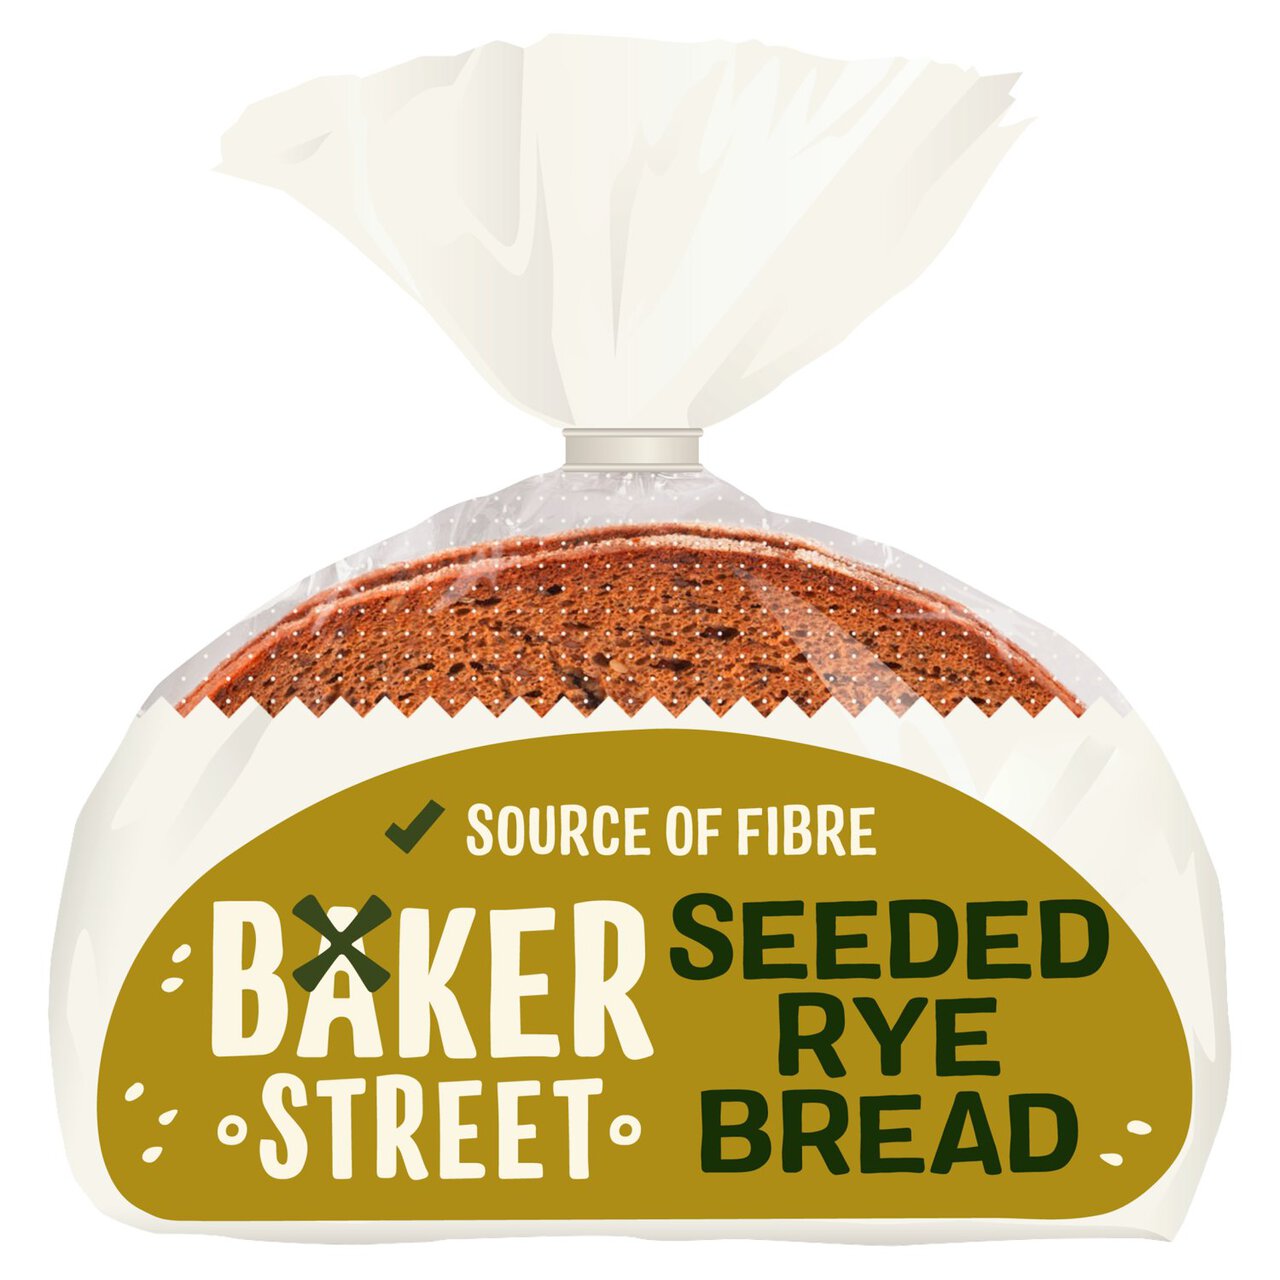 Baker Street Seeded Rye Bread 500g